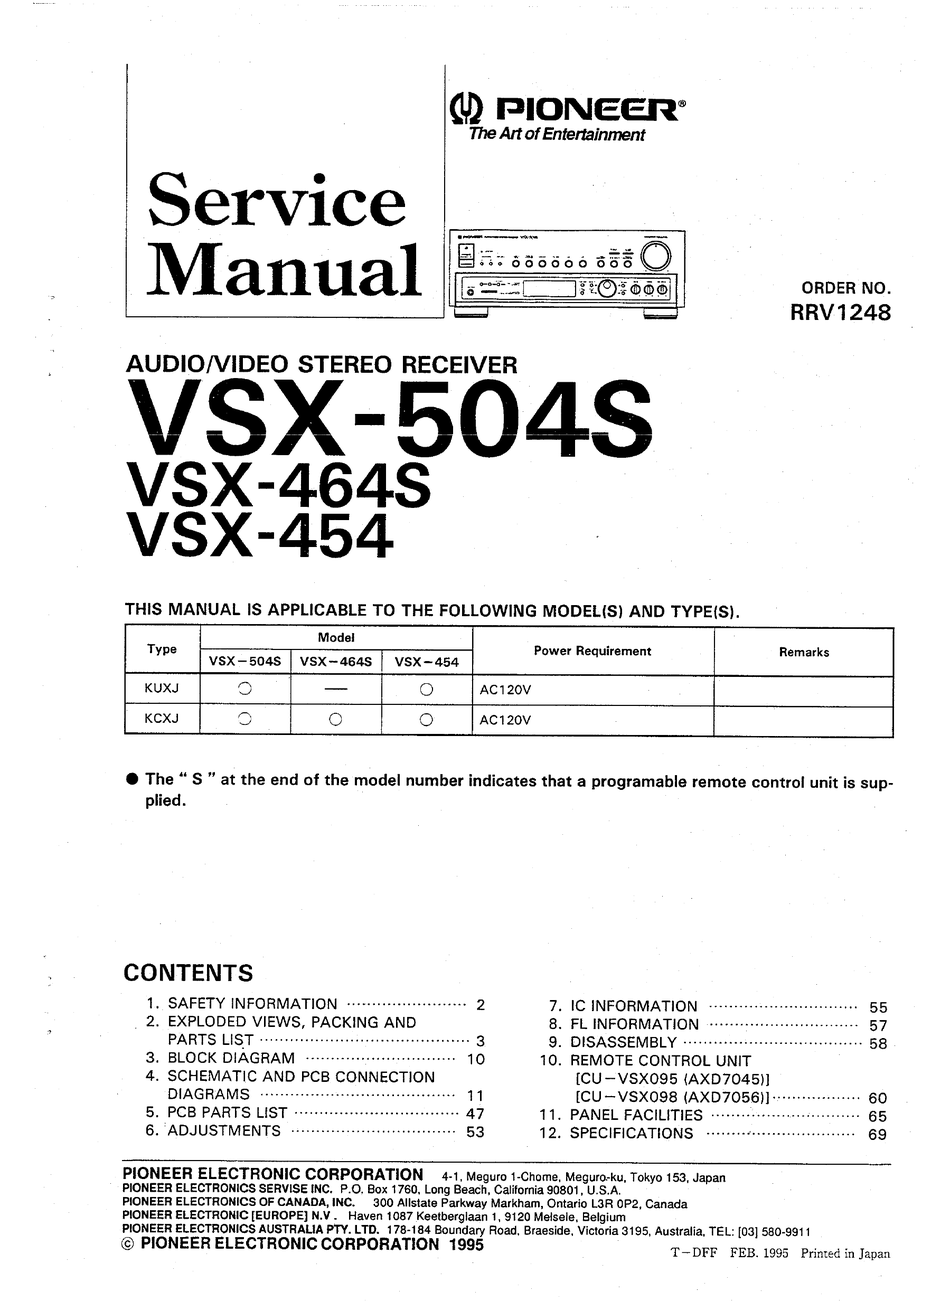 PIONEER VSX-504S SERVICE MANUAL Pdf Download | ManualsLib